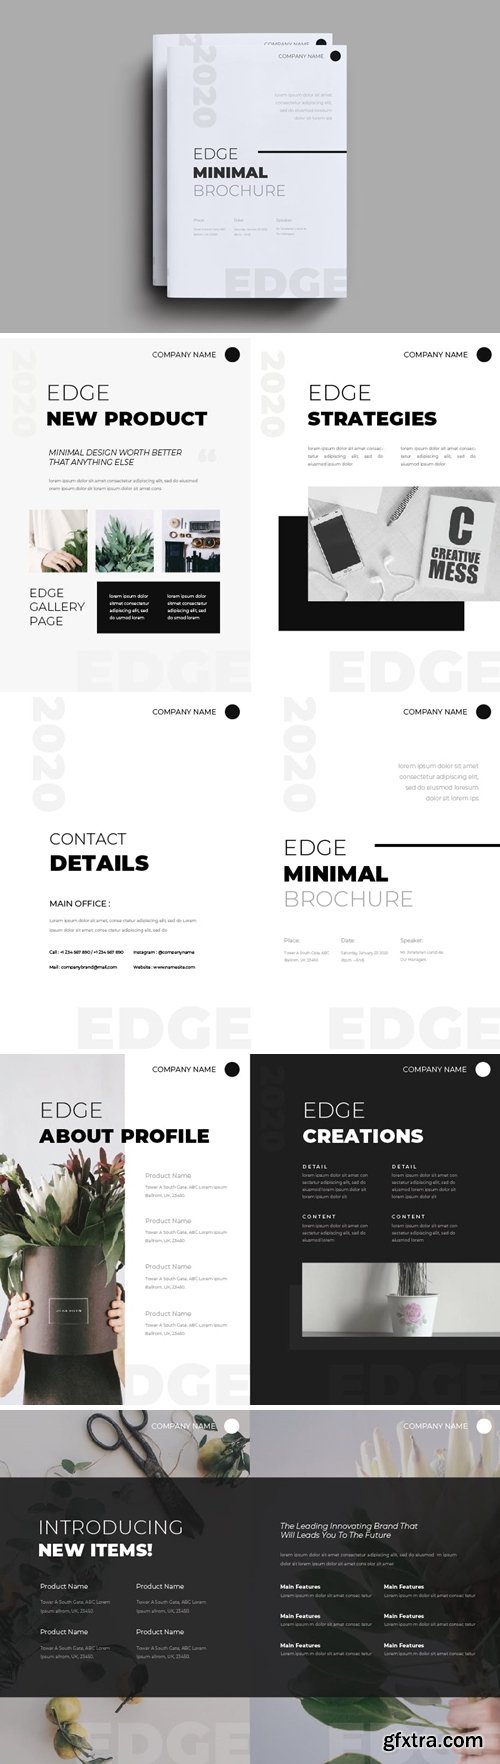 Edge Brochure Template